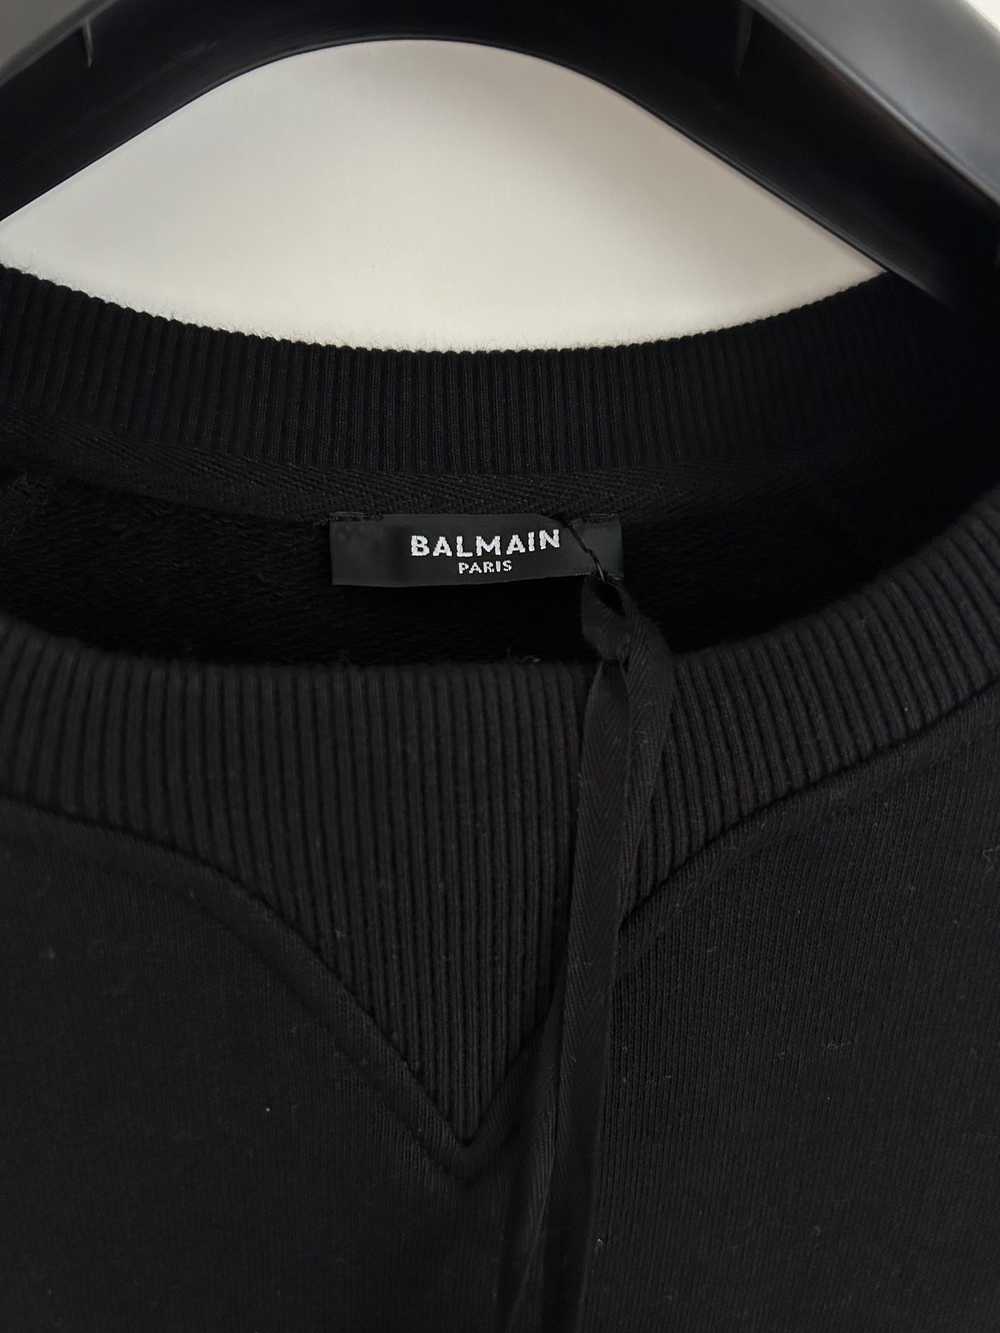 Balmain Black Cotton Logo Print Sweatshirt - image 6